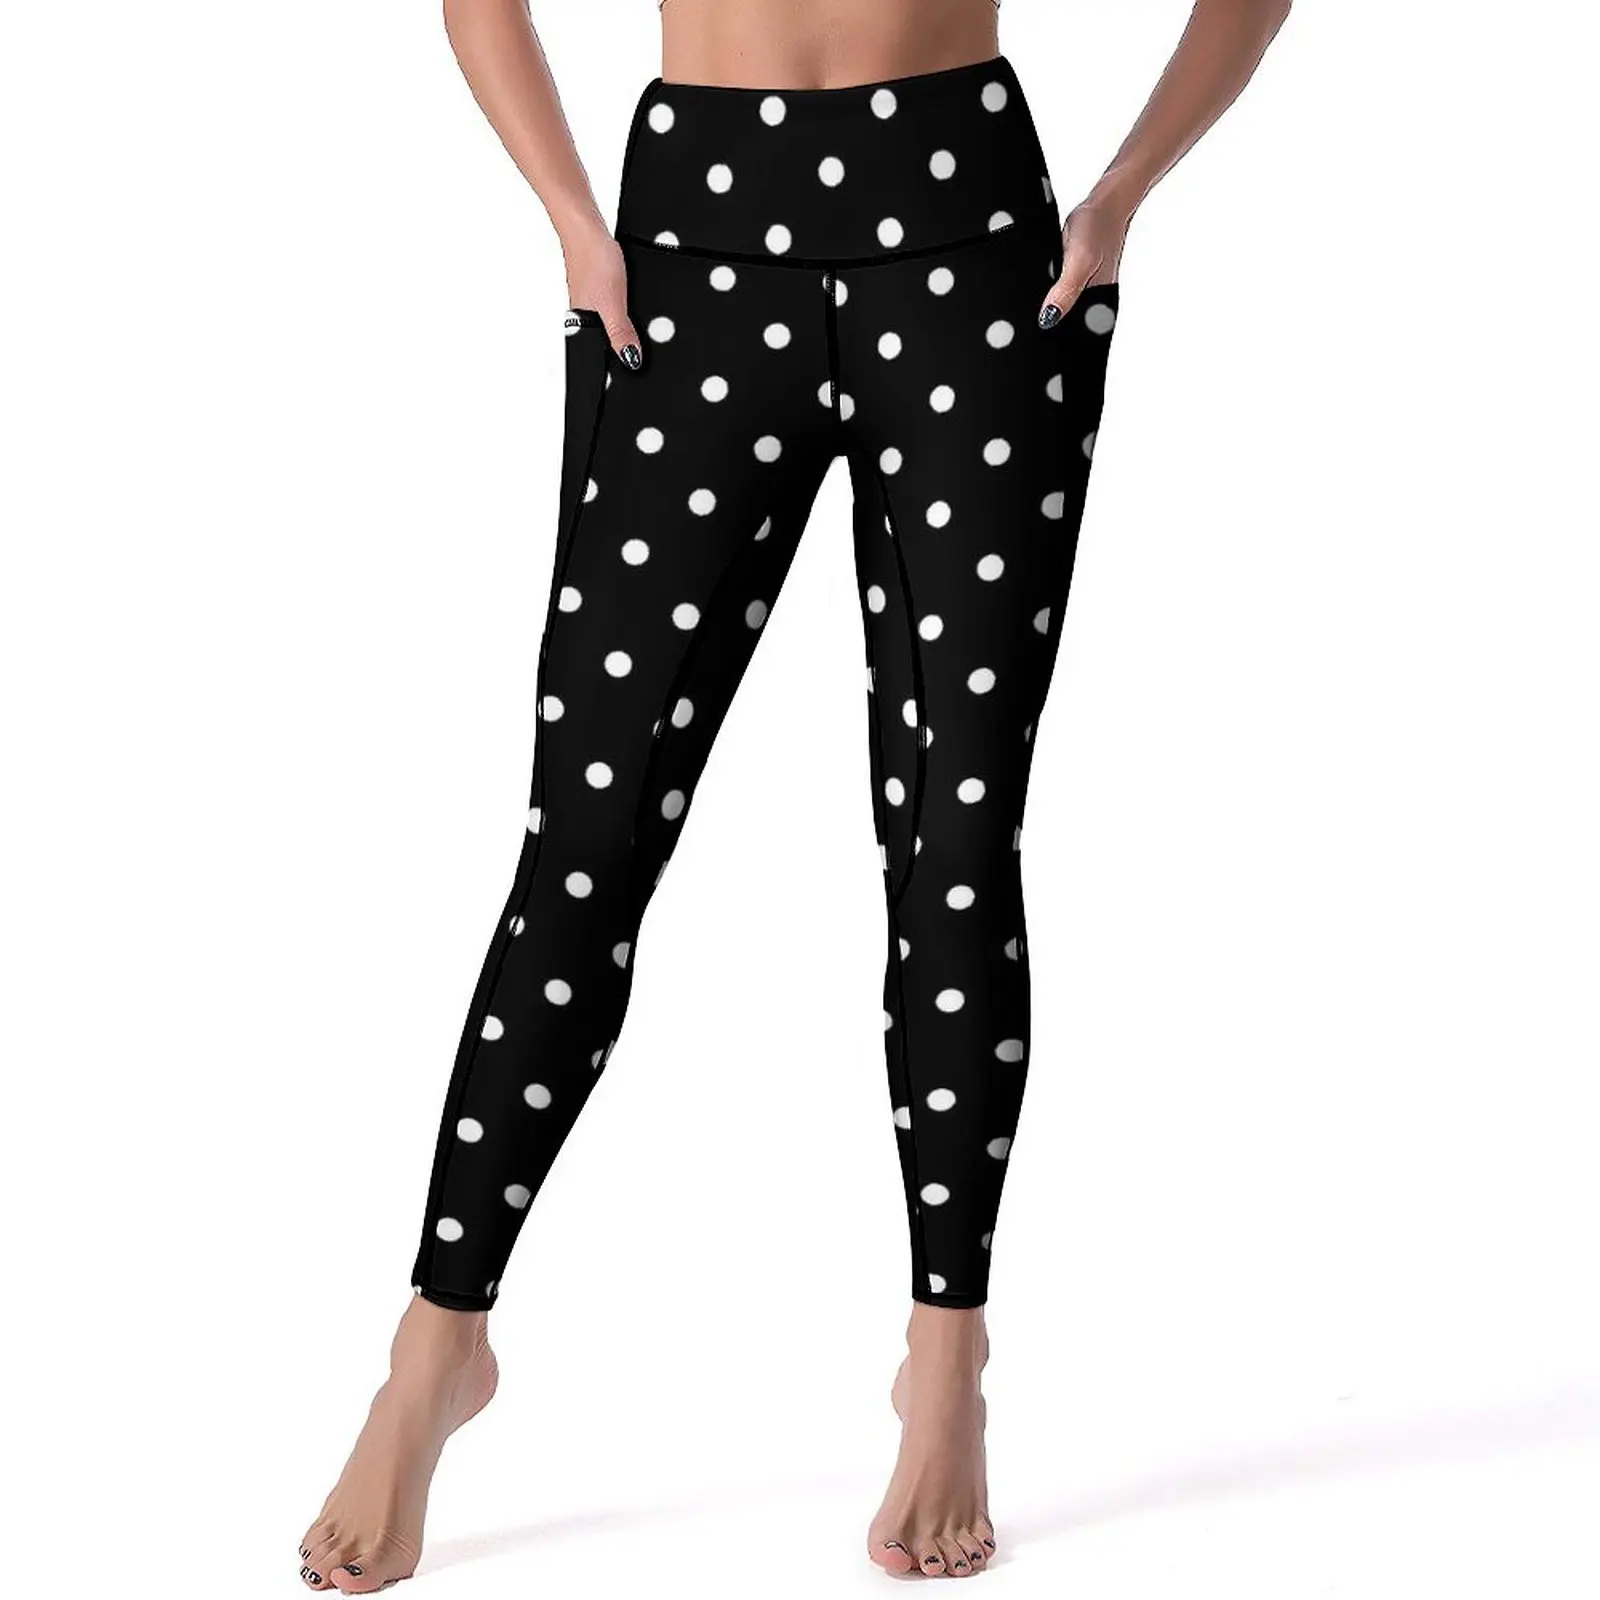 

Black Polka Dots Leggings Vintage Print High Waist Yoga Pants Casual Stretchy Yoga Legging Lady Graphic Running Sport Pants